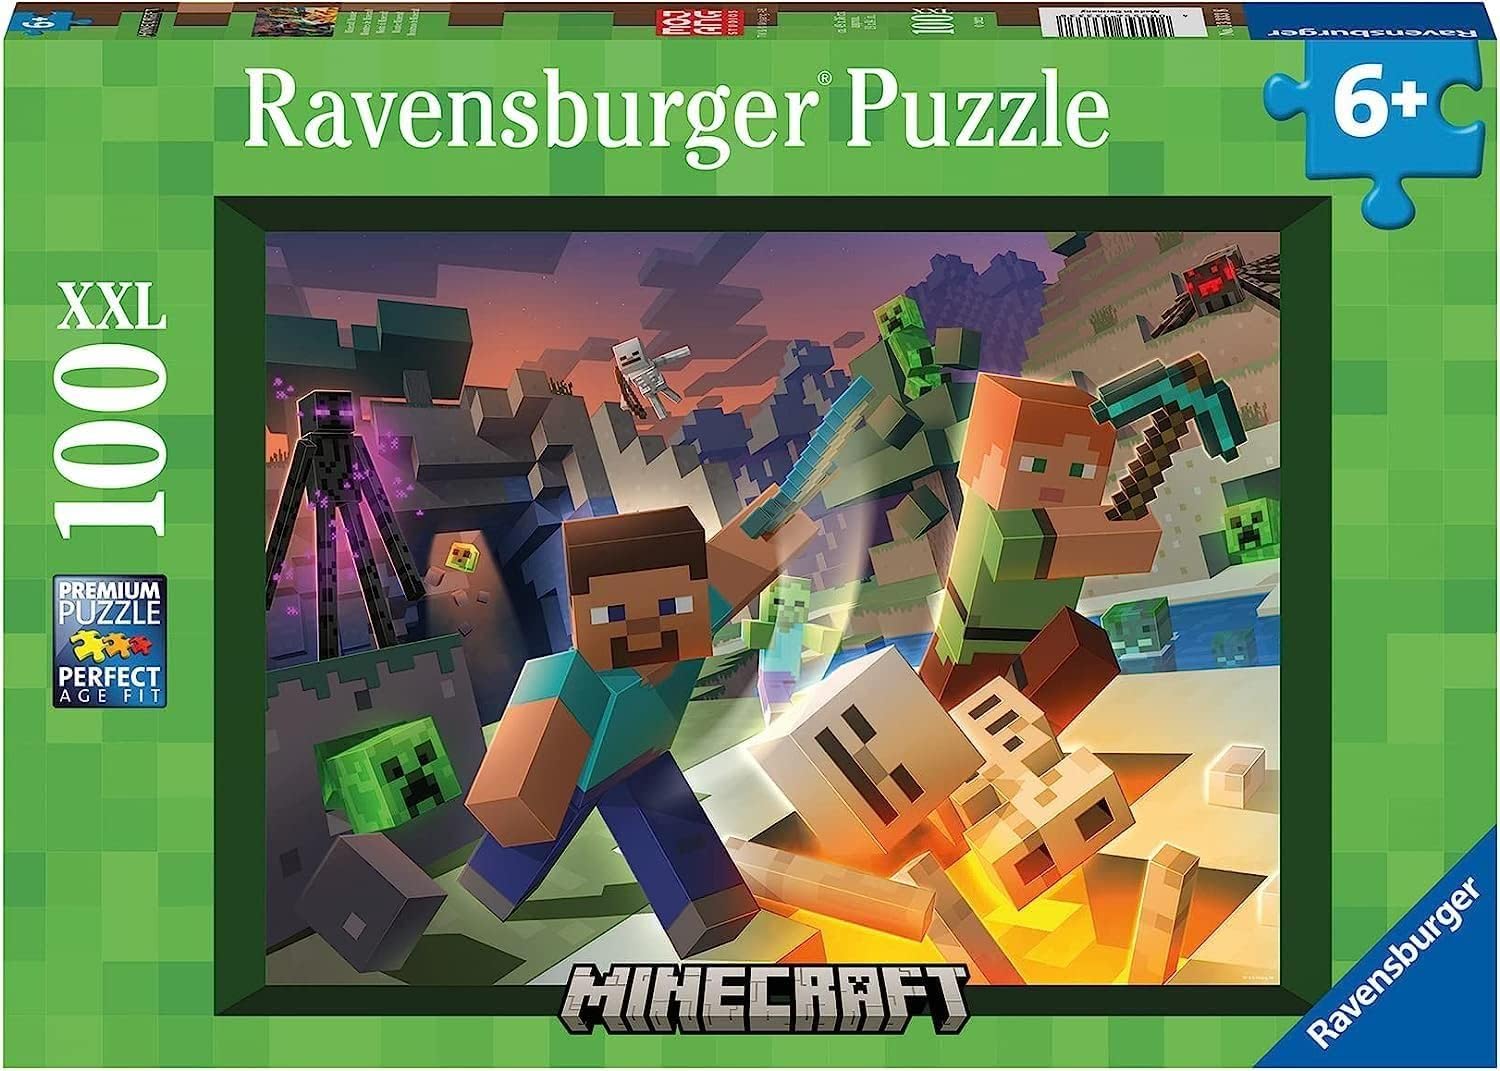 13333 Ravensburger Puzzle 100 pz. XXL Minecraft